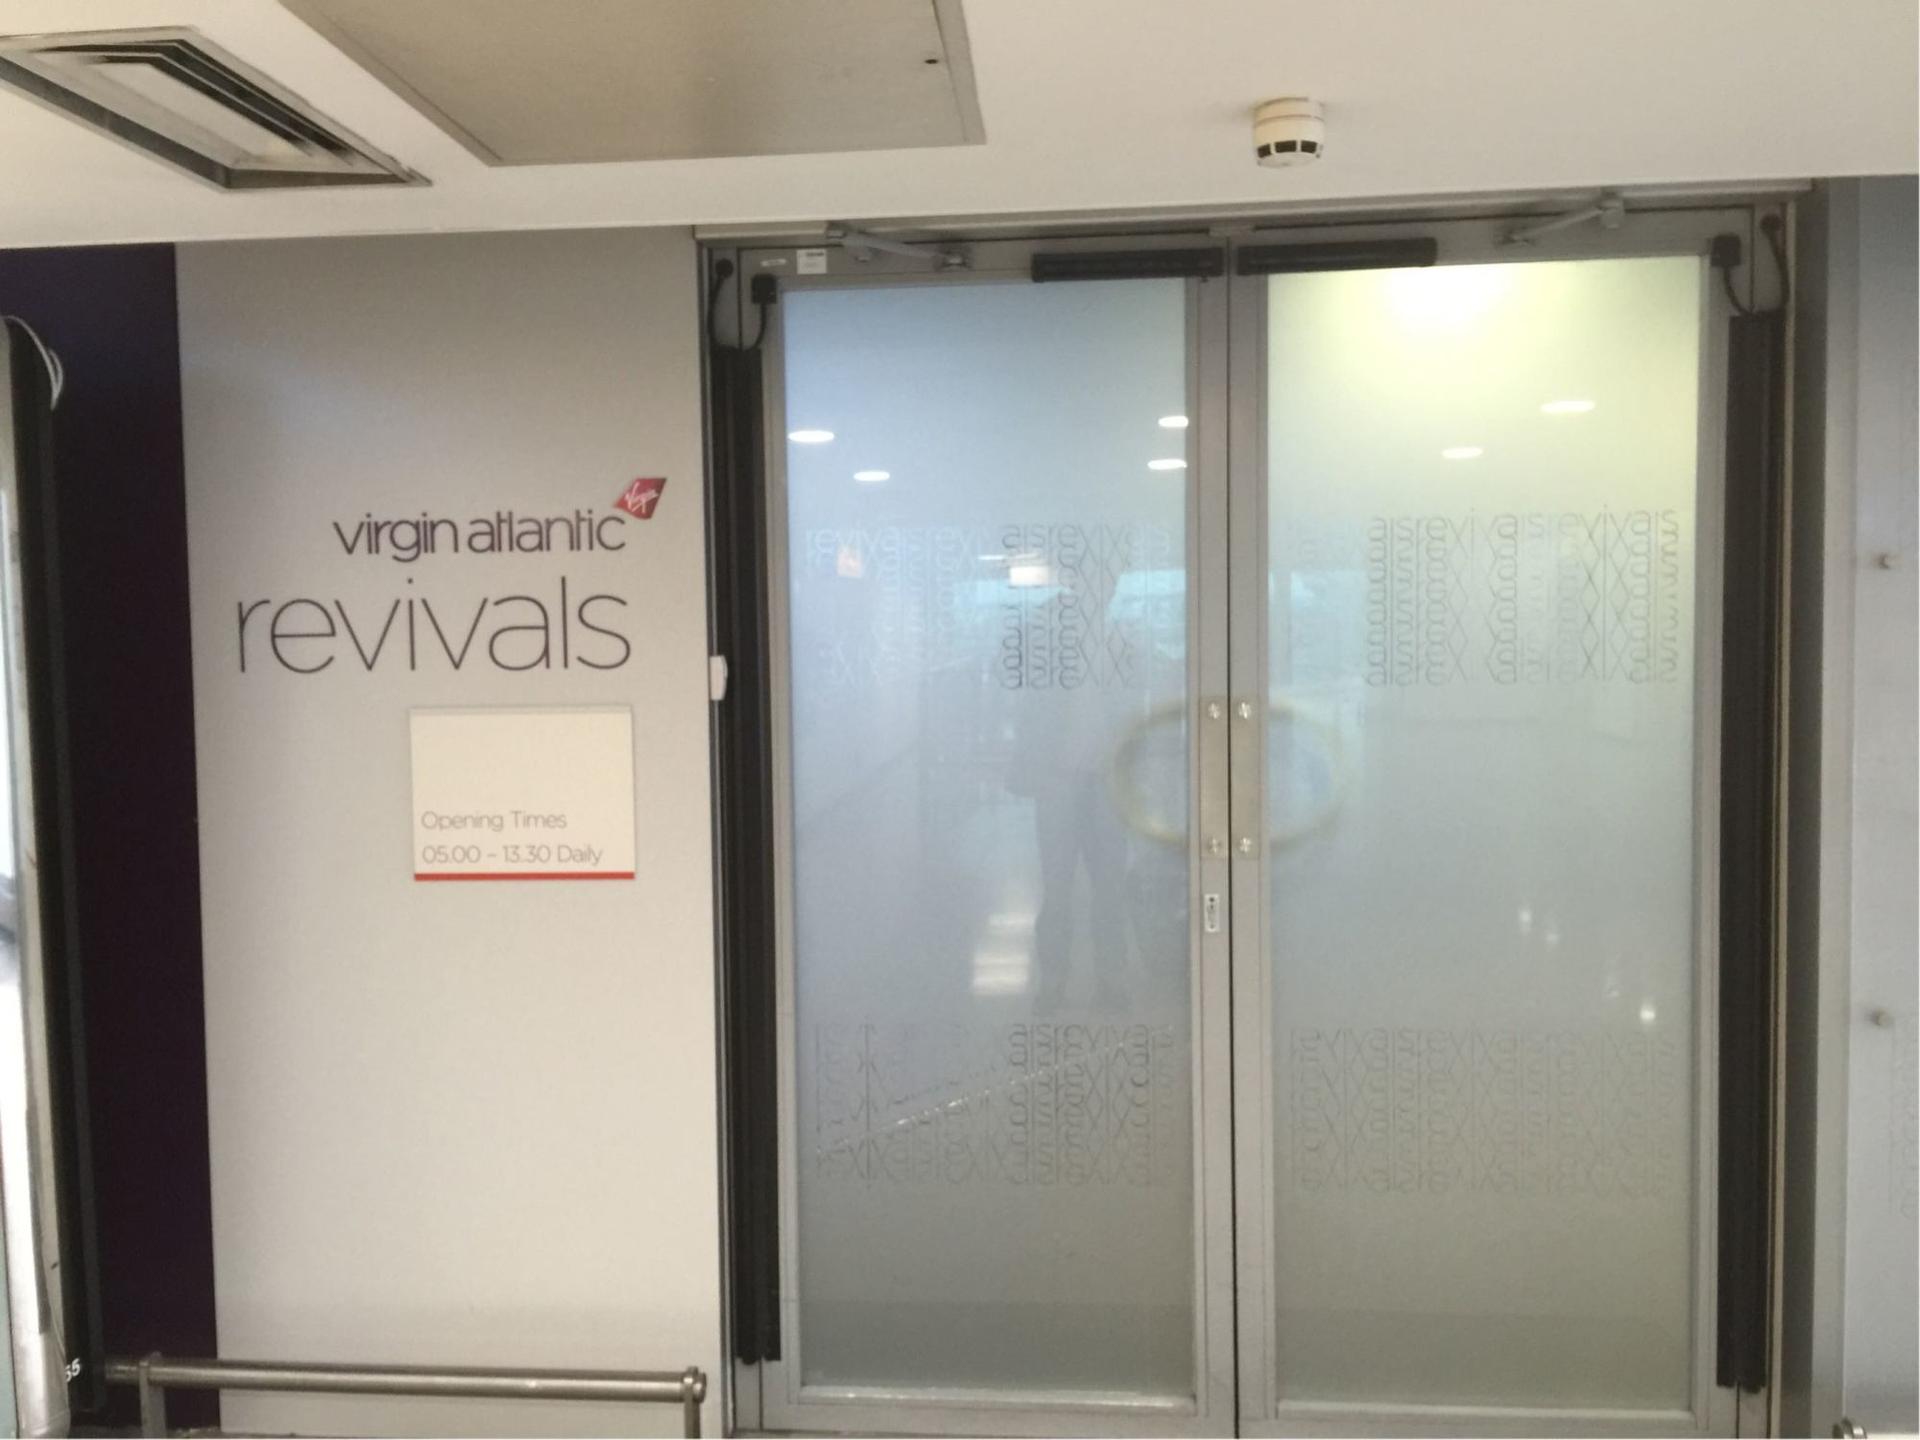 Virgin Atlantic Revivals Lounge image 6 of 10